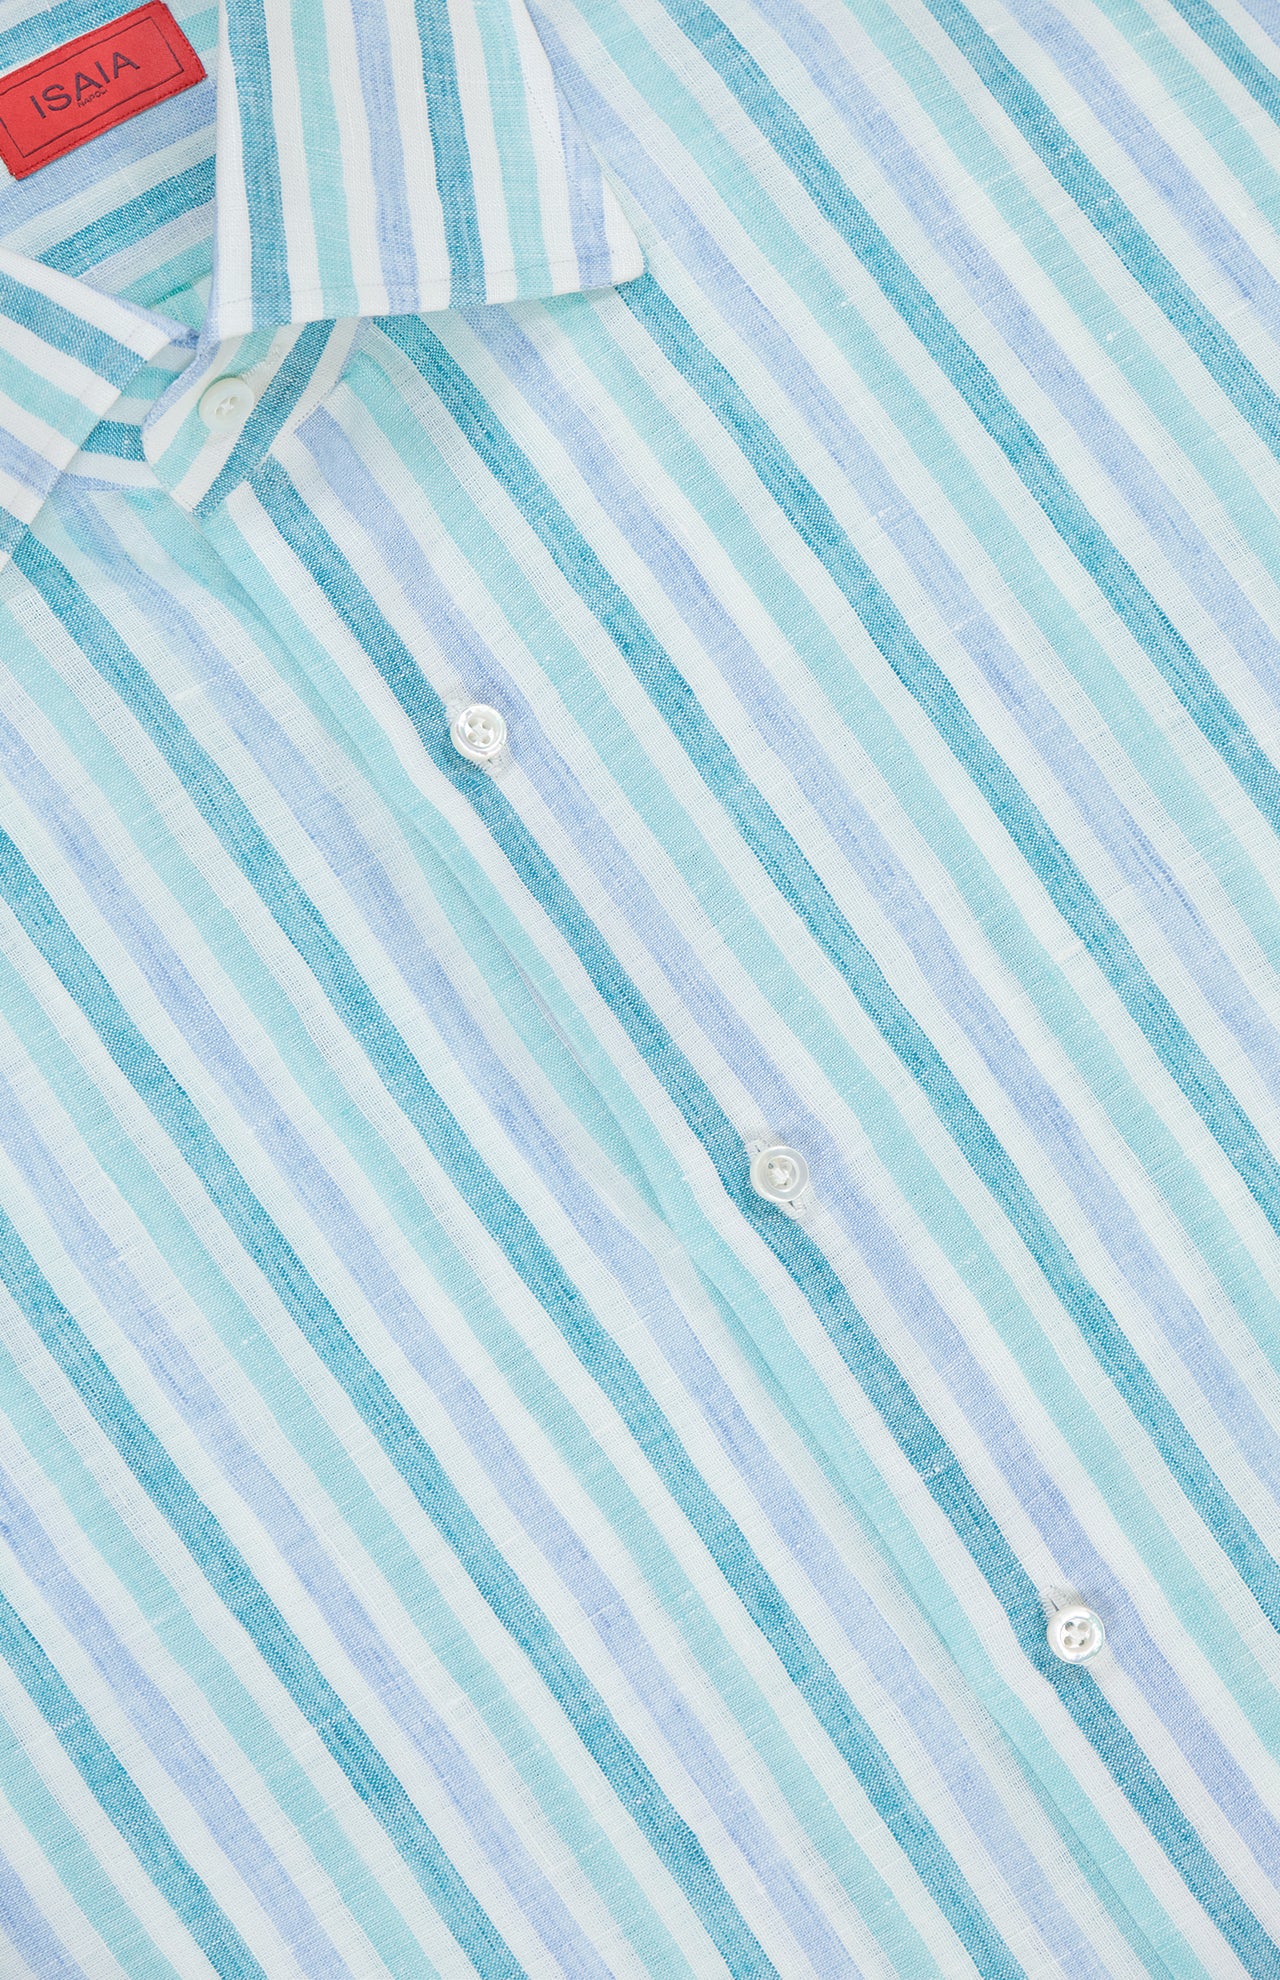 Superlino Summer Stripes Shirt (7363658317939)